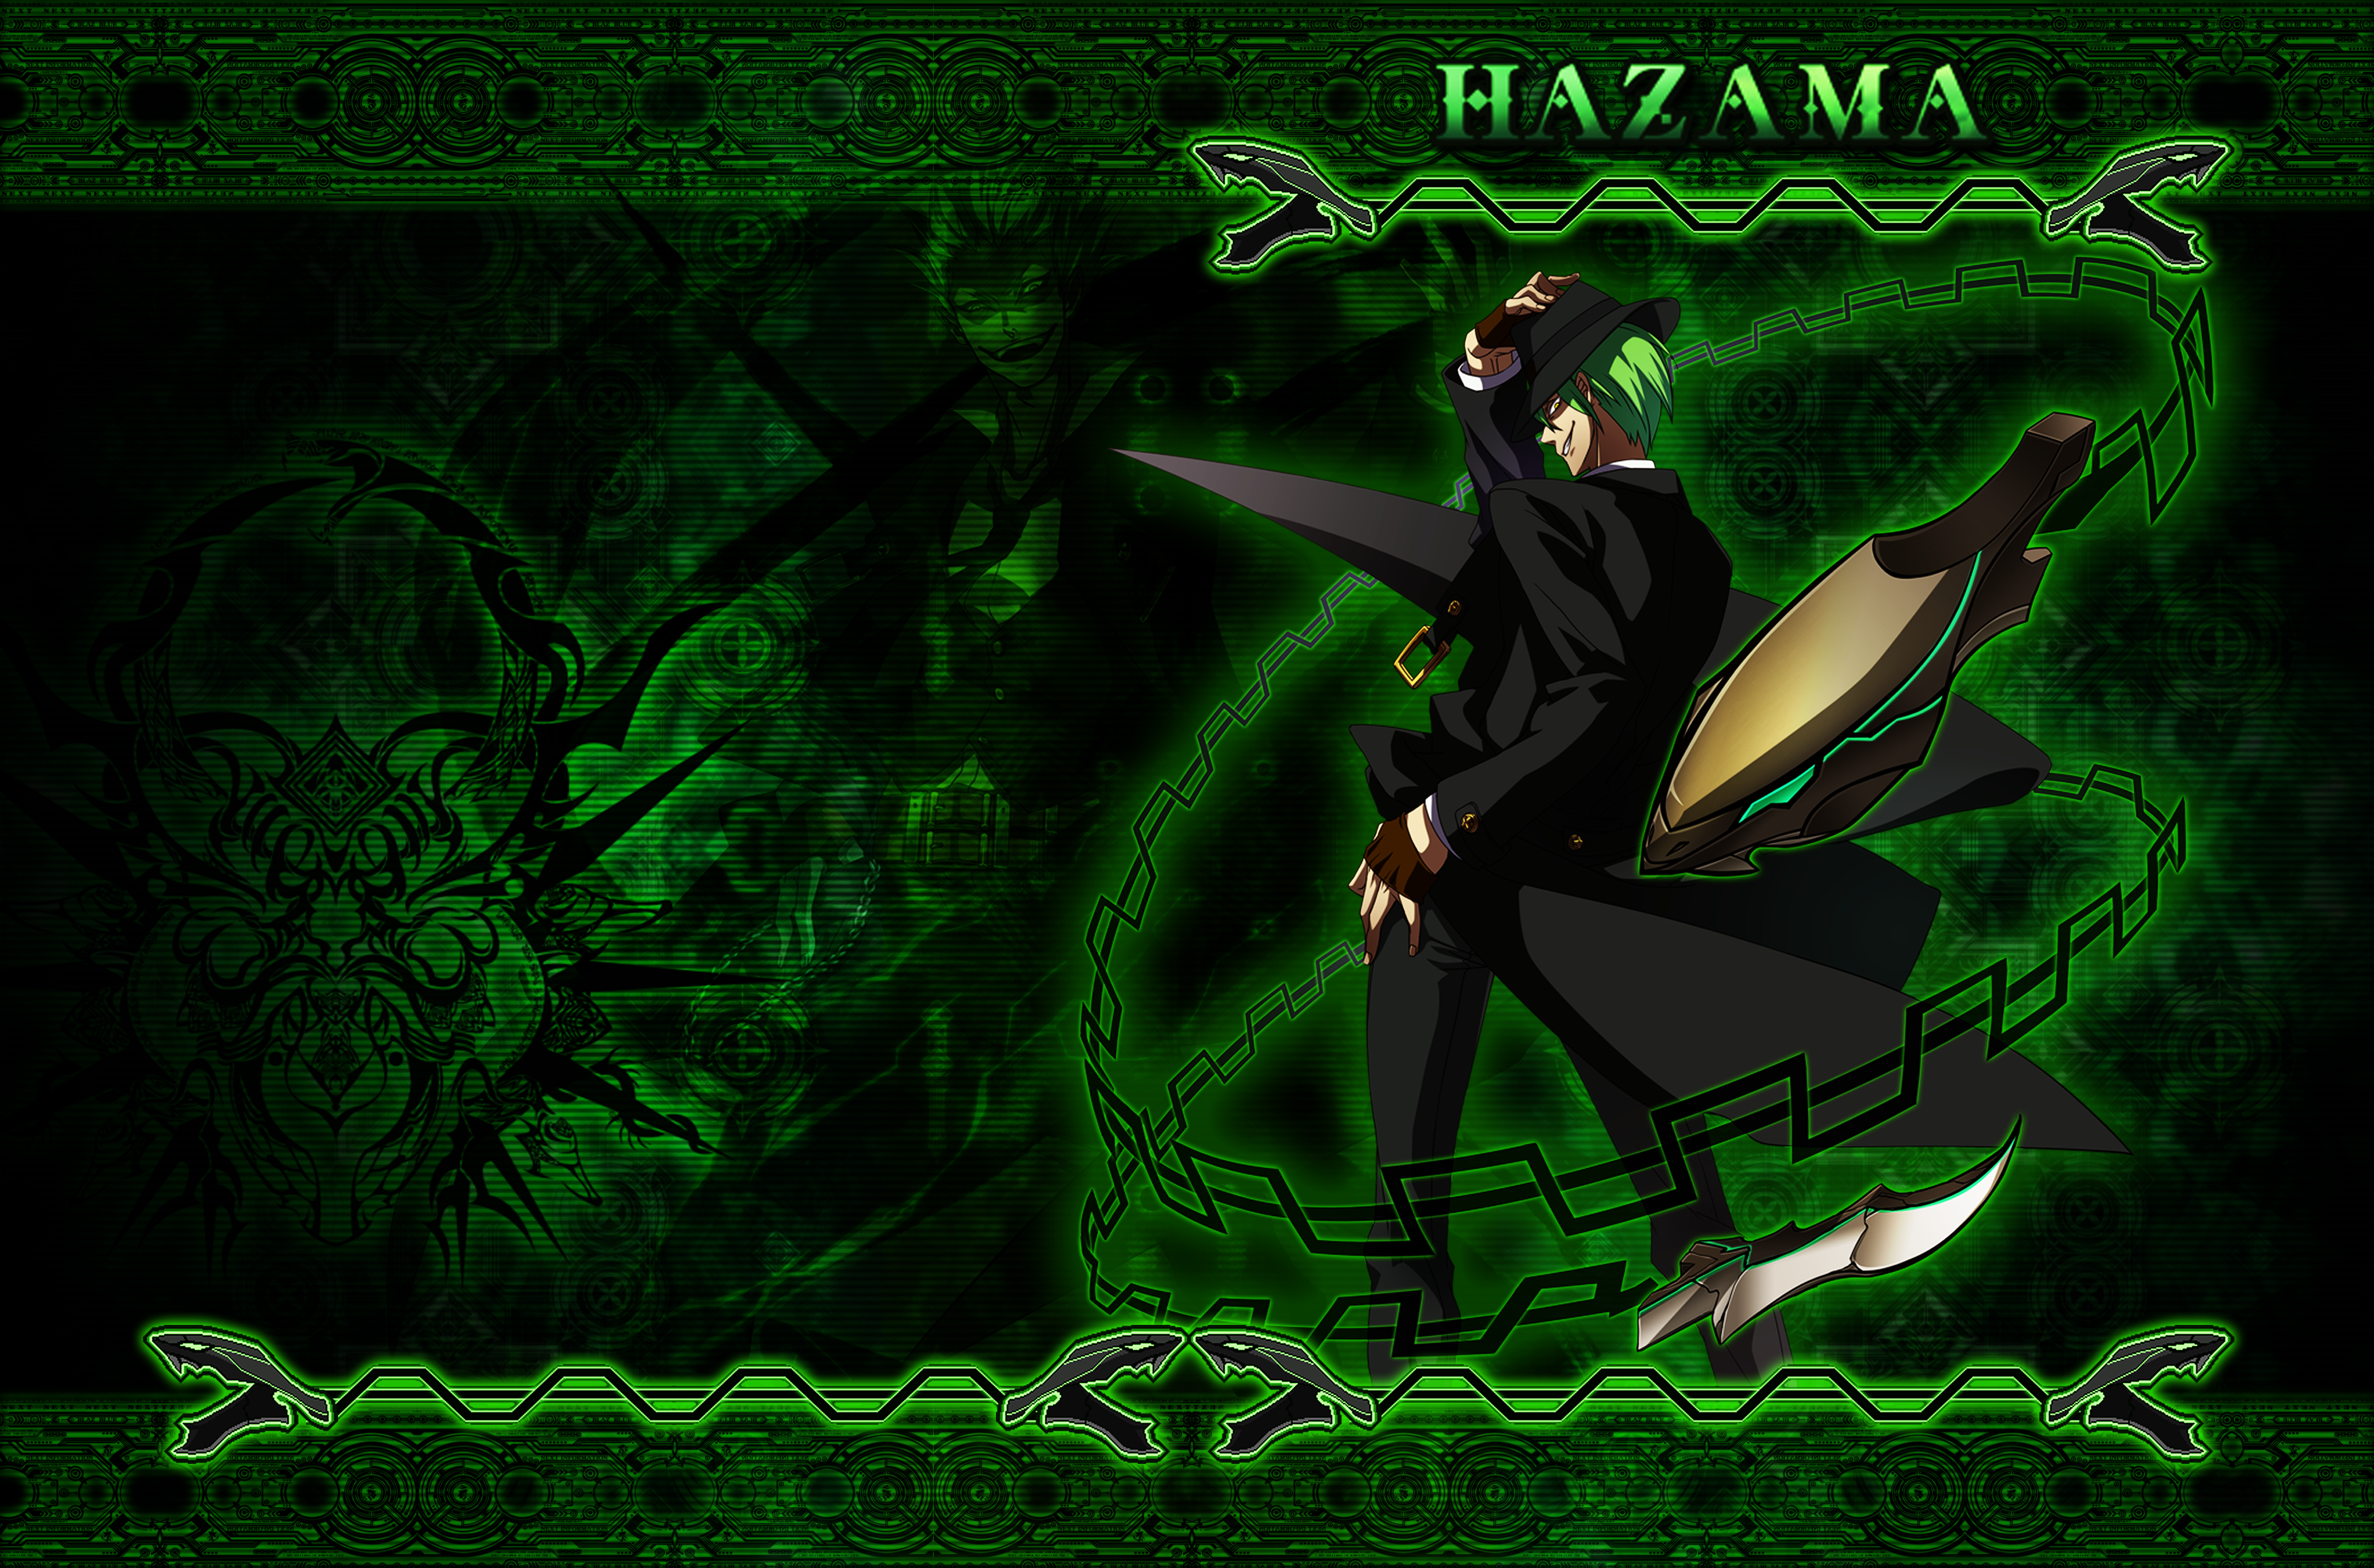 You just got Hazama'd favourites by EnmismAnima on DeviantArt